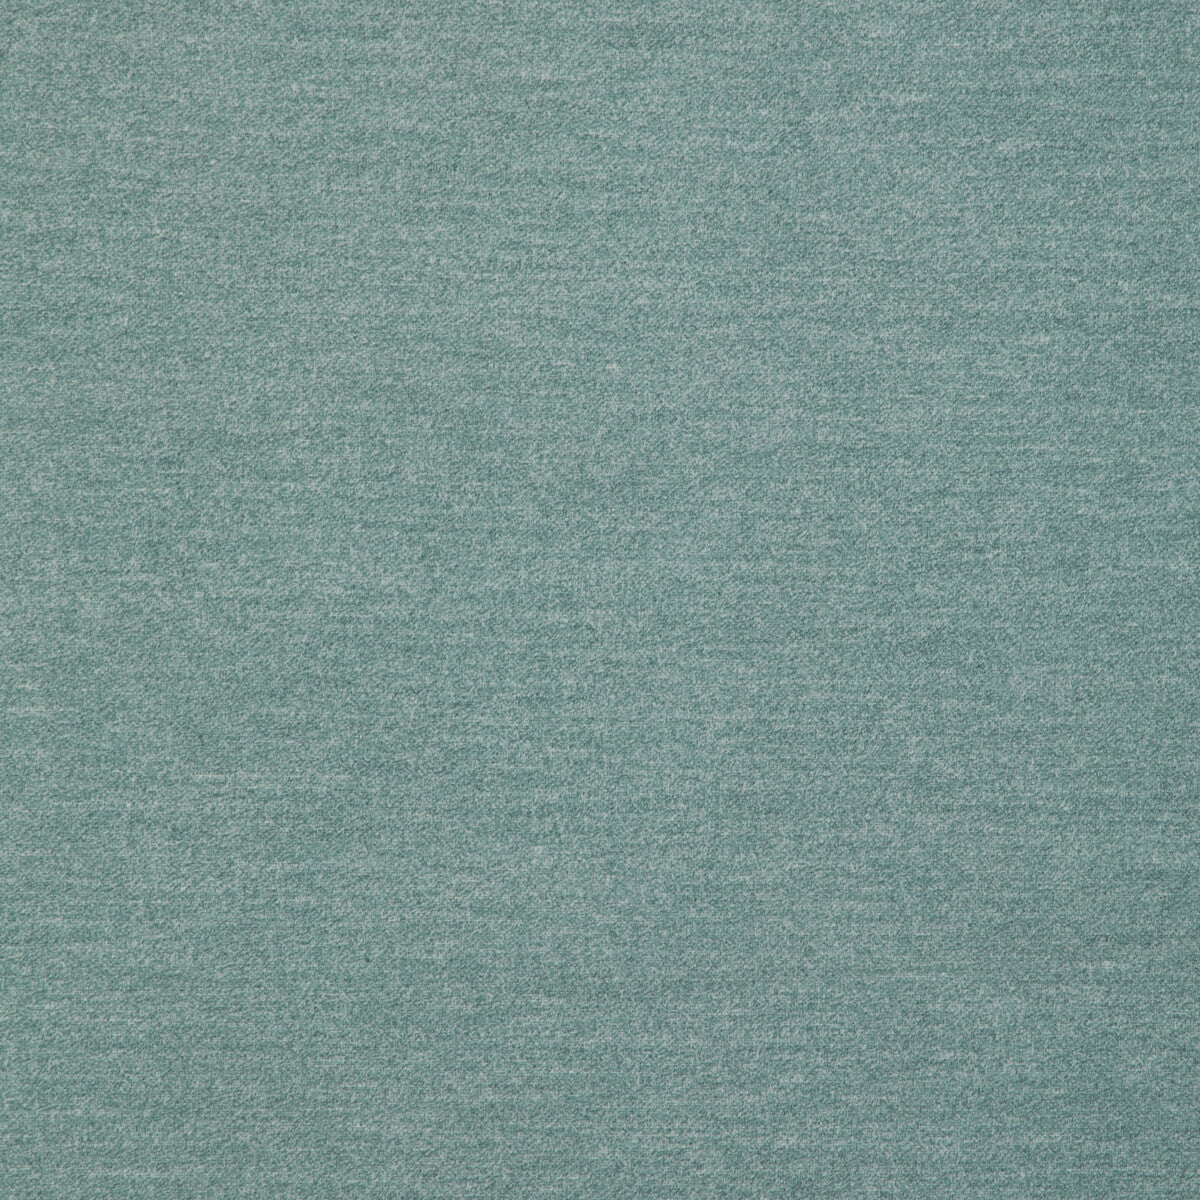 Kravet Smart fabric in 37000-13 color - pattern 37000.13.0 - by Kravet Smart in the Performance Kravetarmor collection